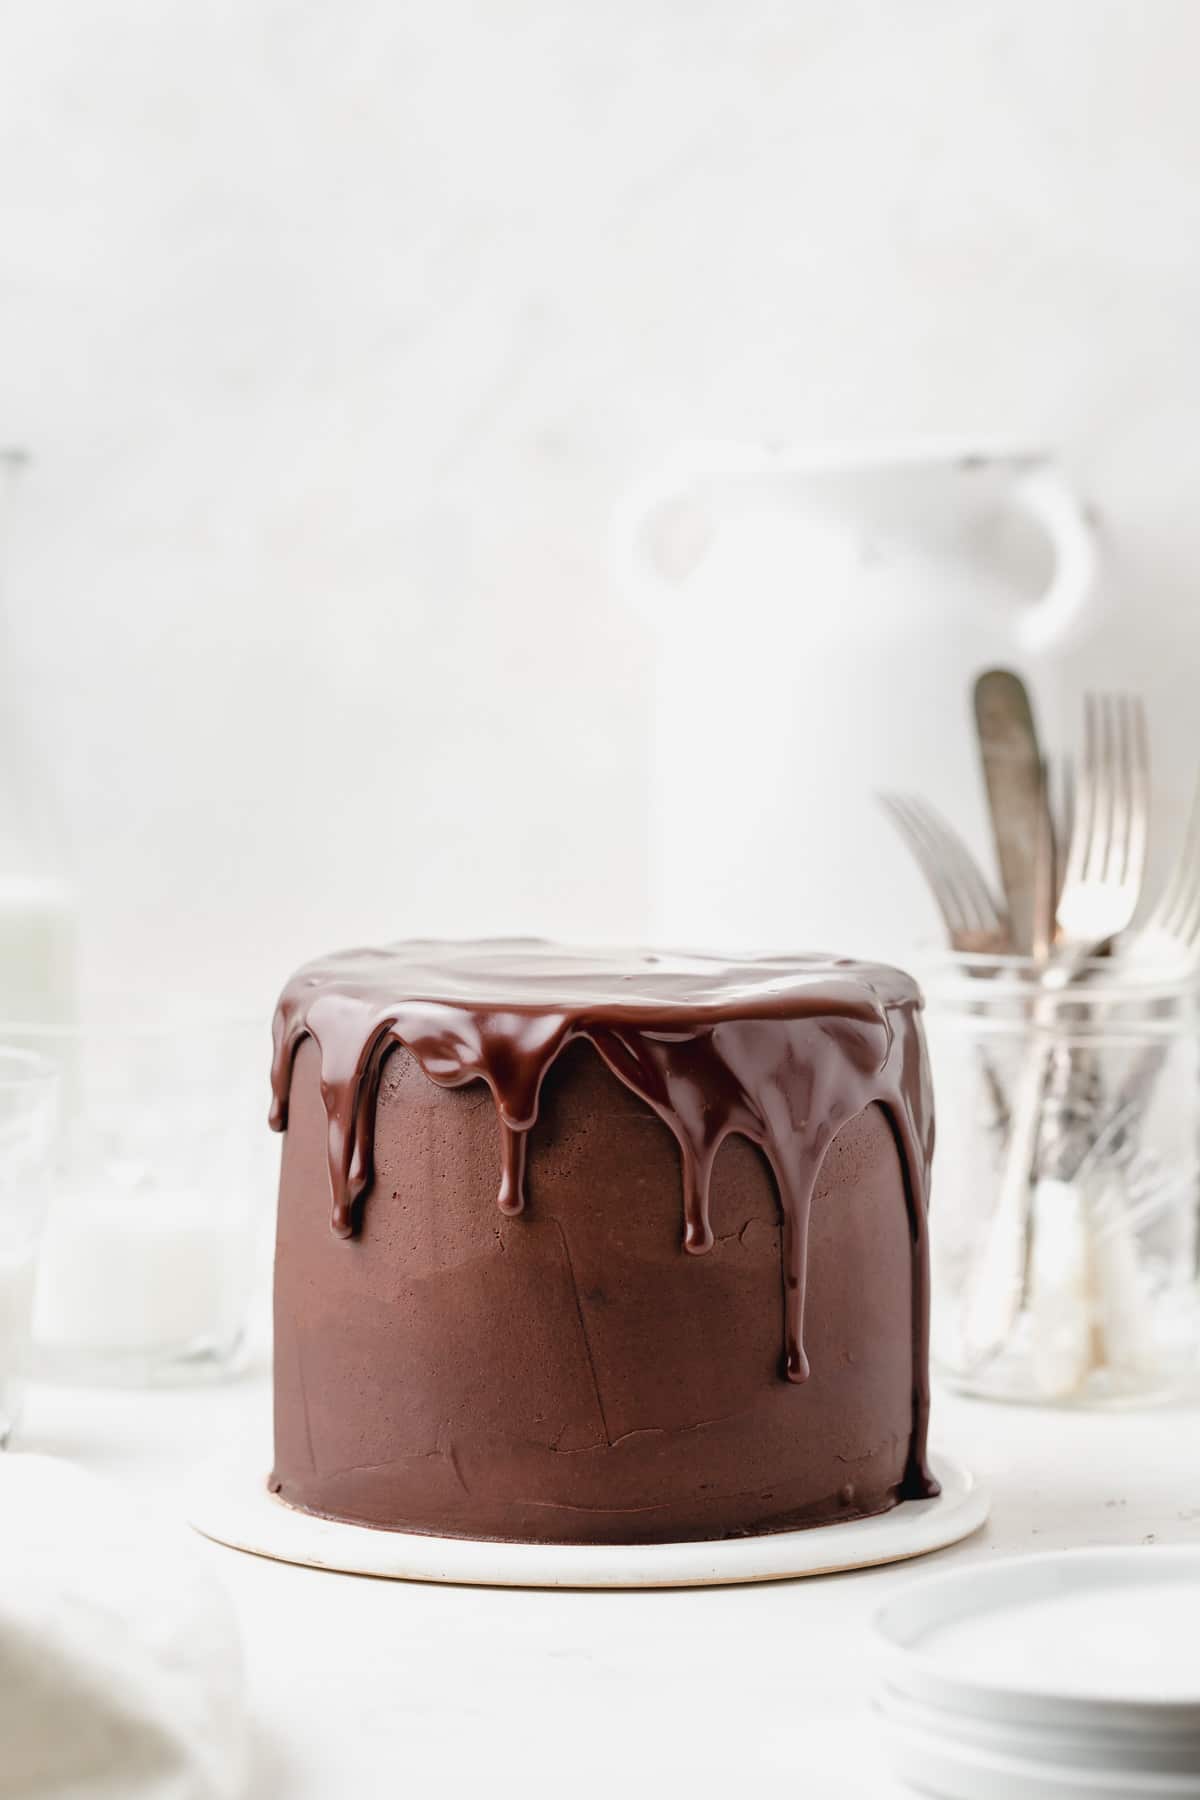 triple chocolate layer cake with dark chocolate drip